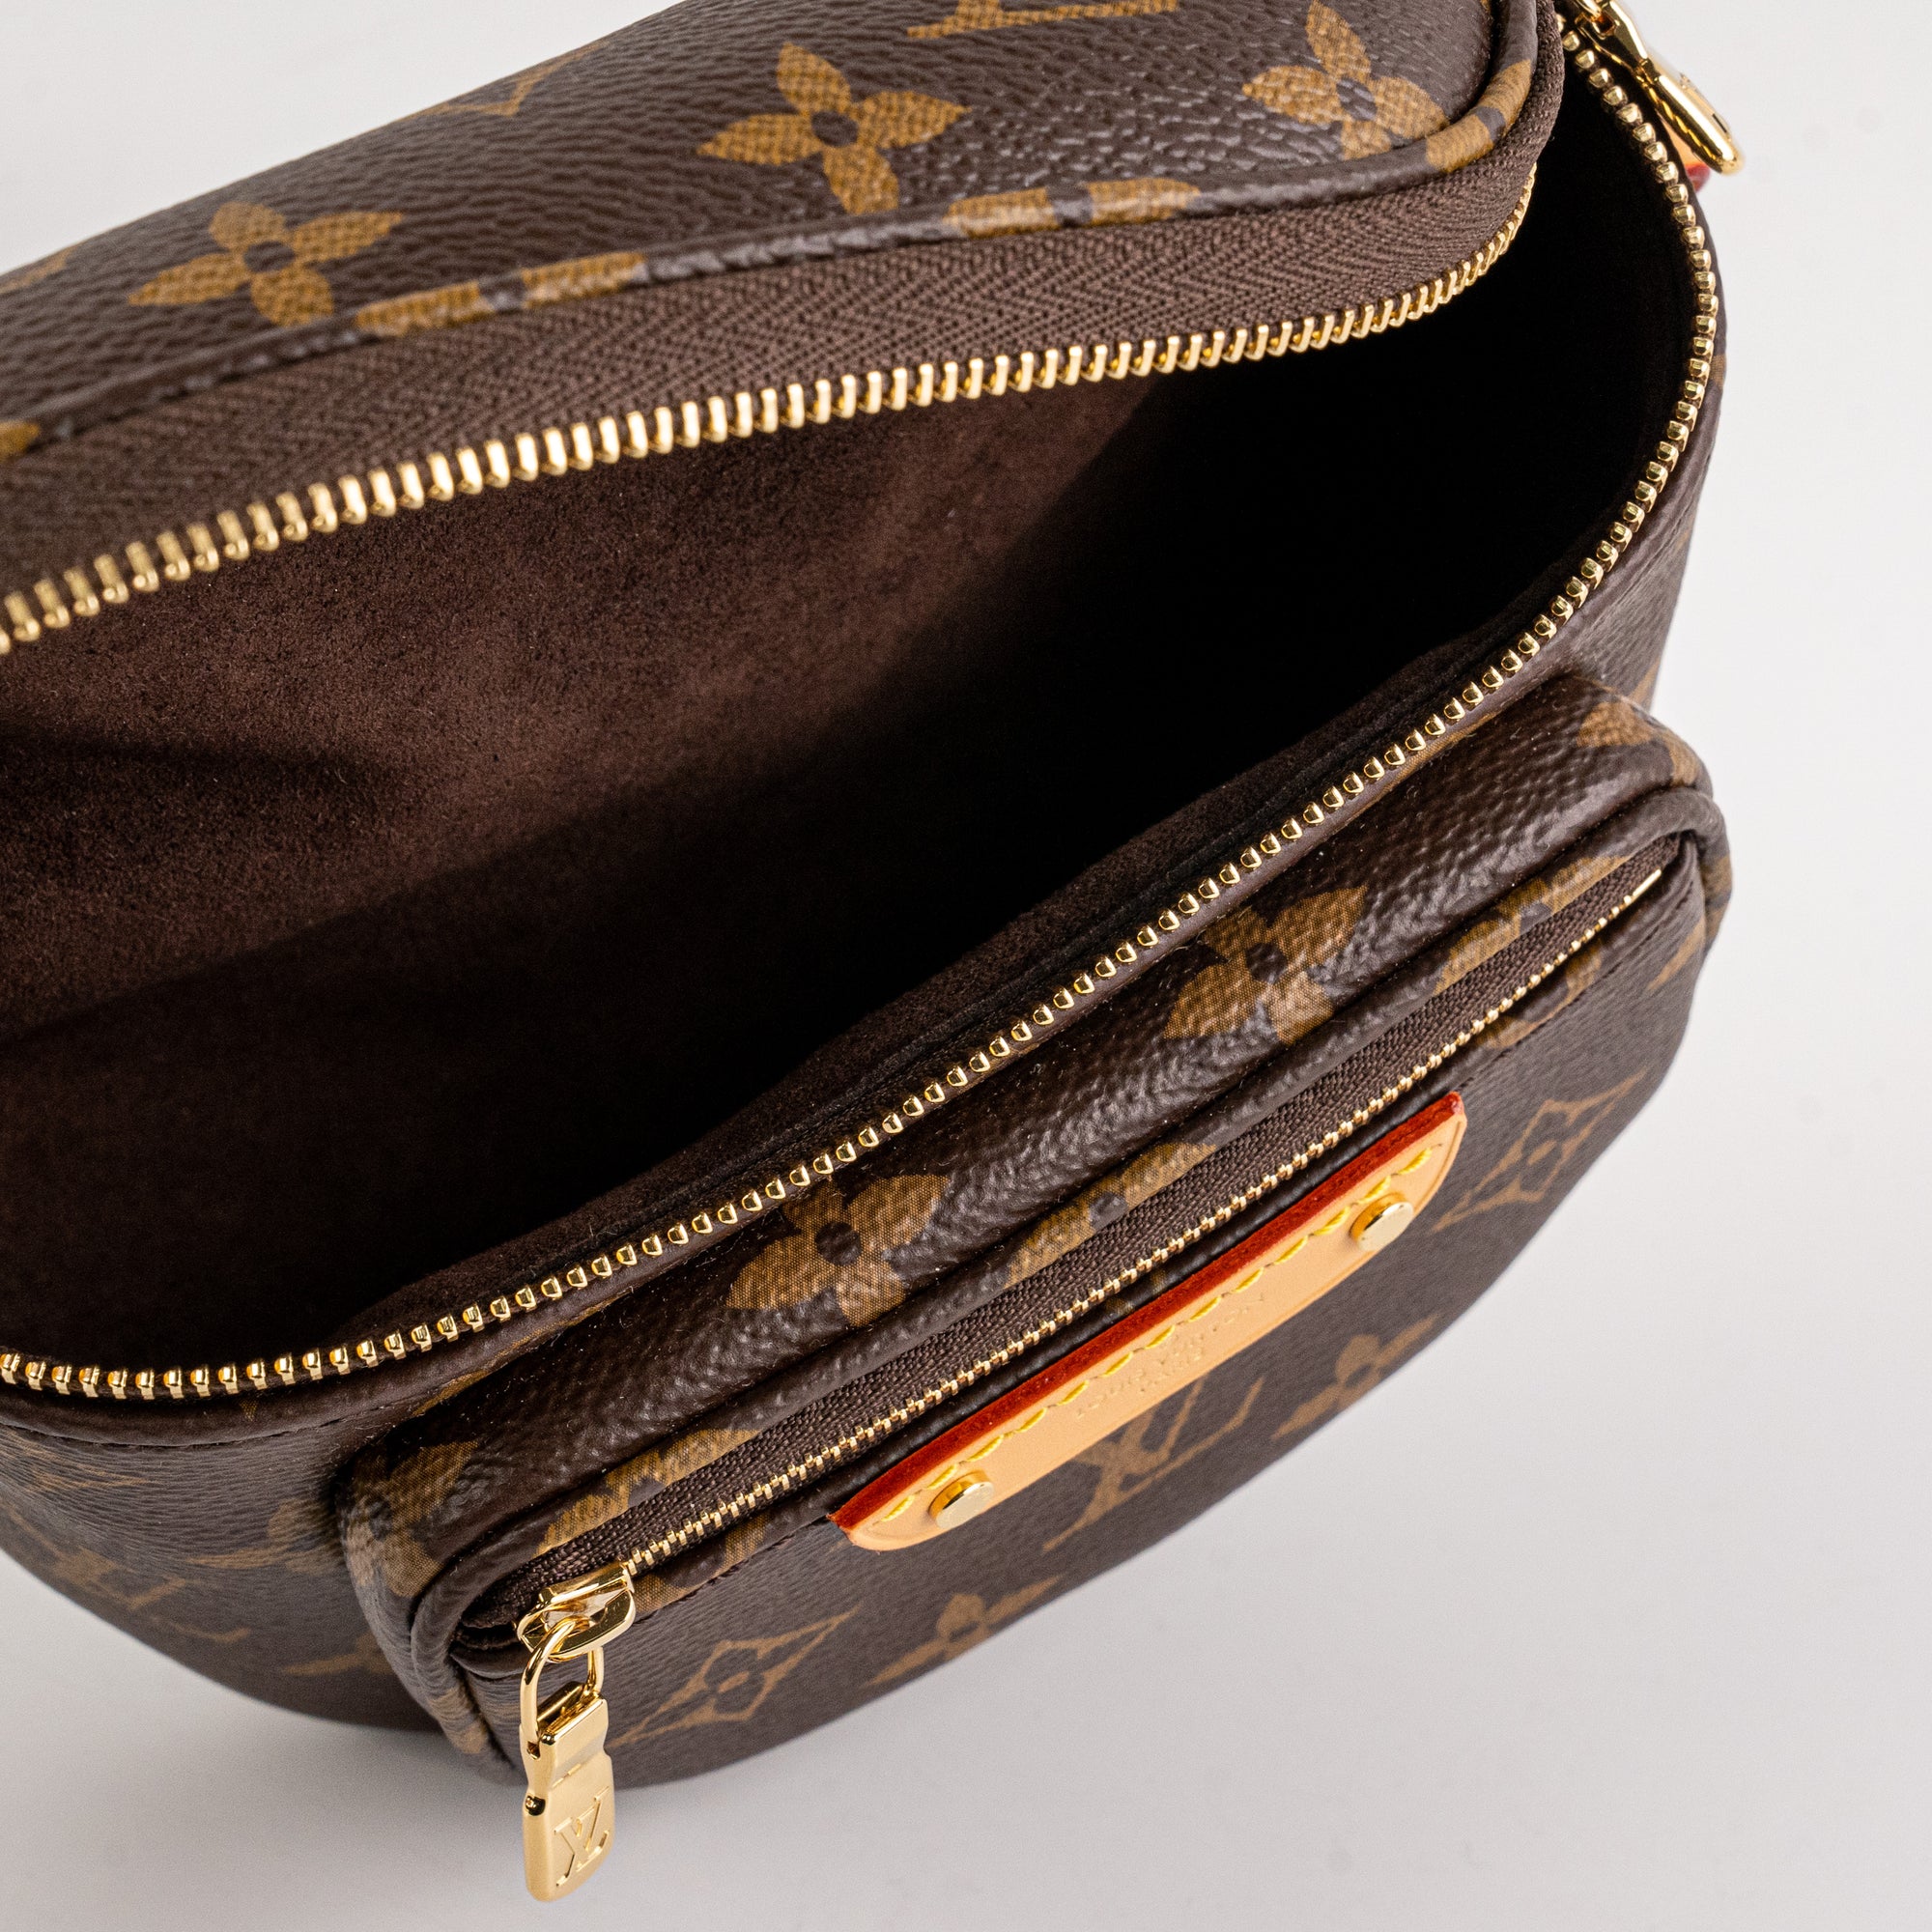 ITEM 11 - Louis Vuitton Mini Bumbag Belt Bag Monogram - THE PURSE AFFAIR